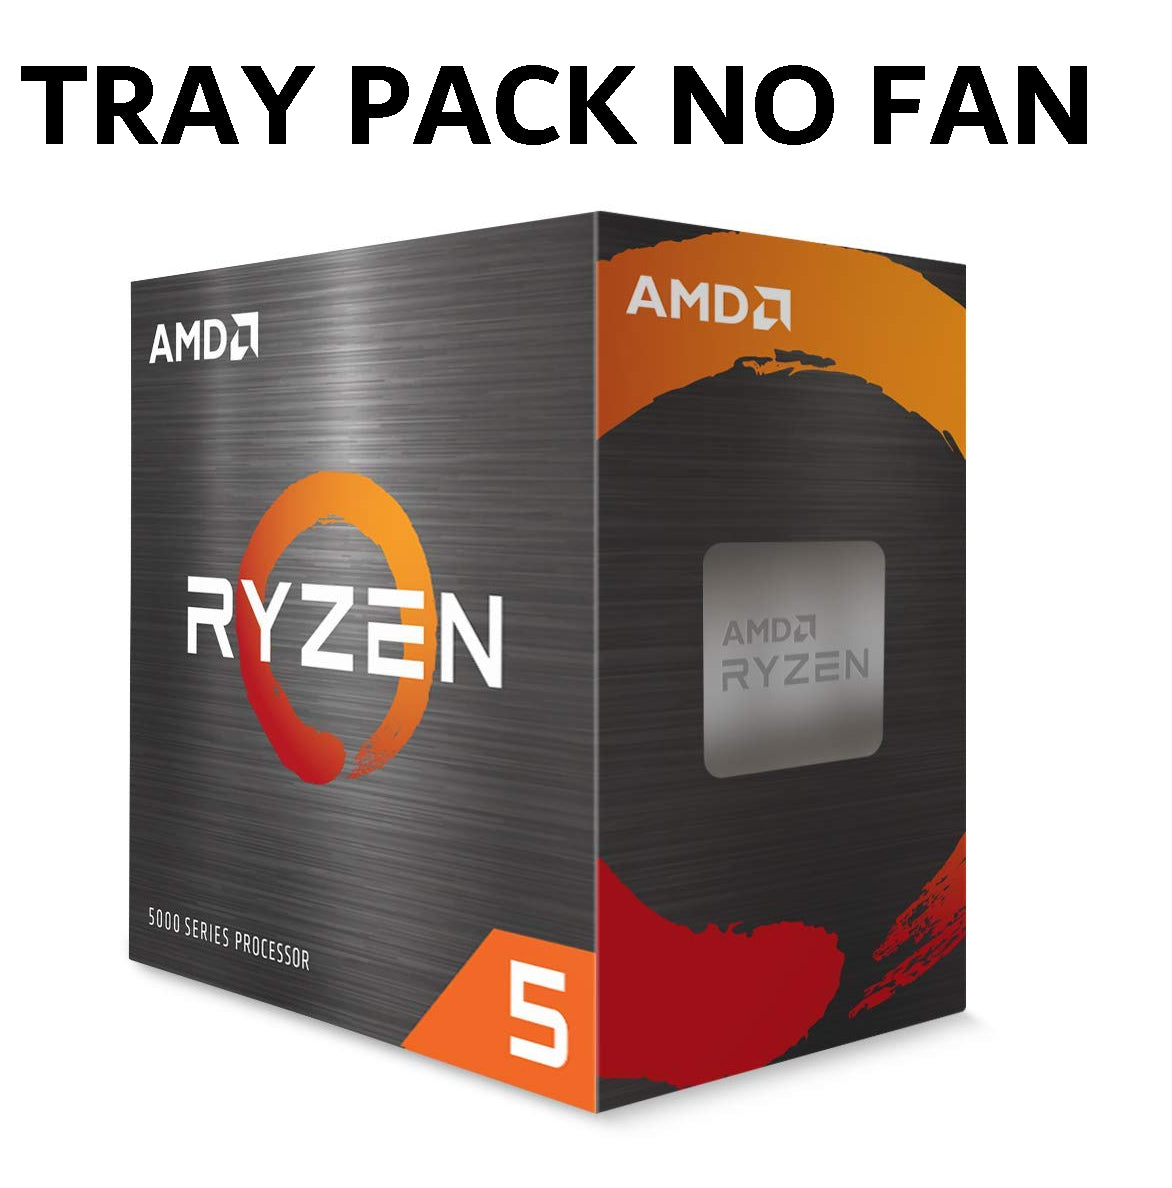 AMD Ryzen 5 1600 processor 3.2 GHz 16 MB L3